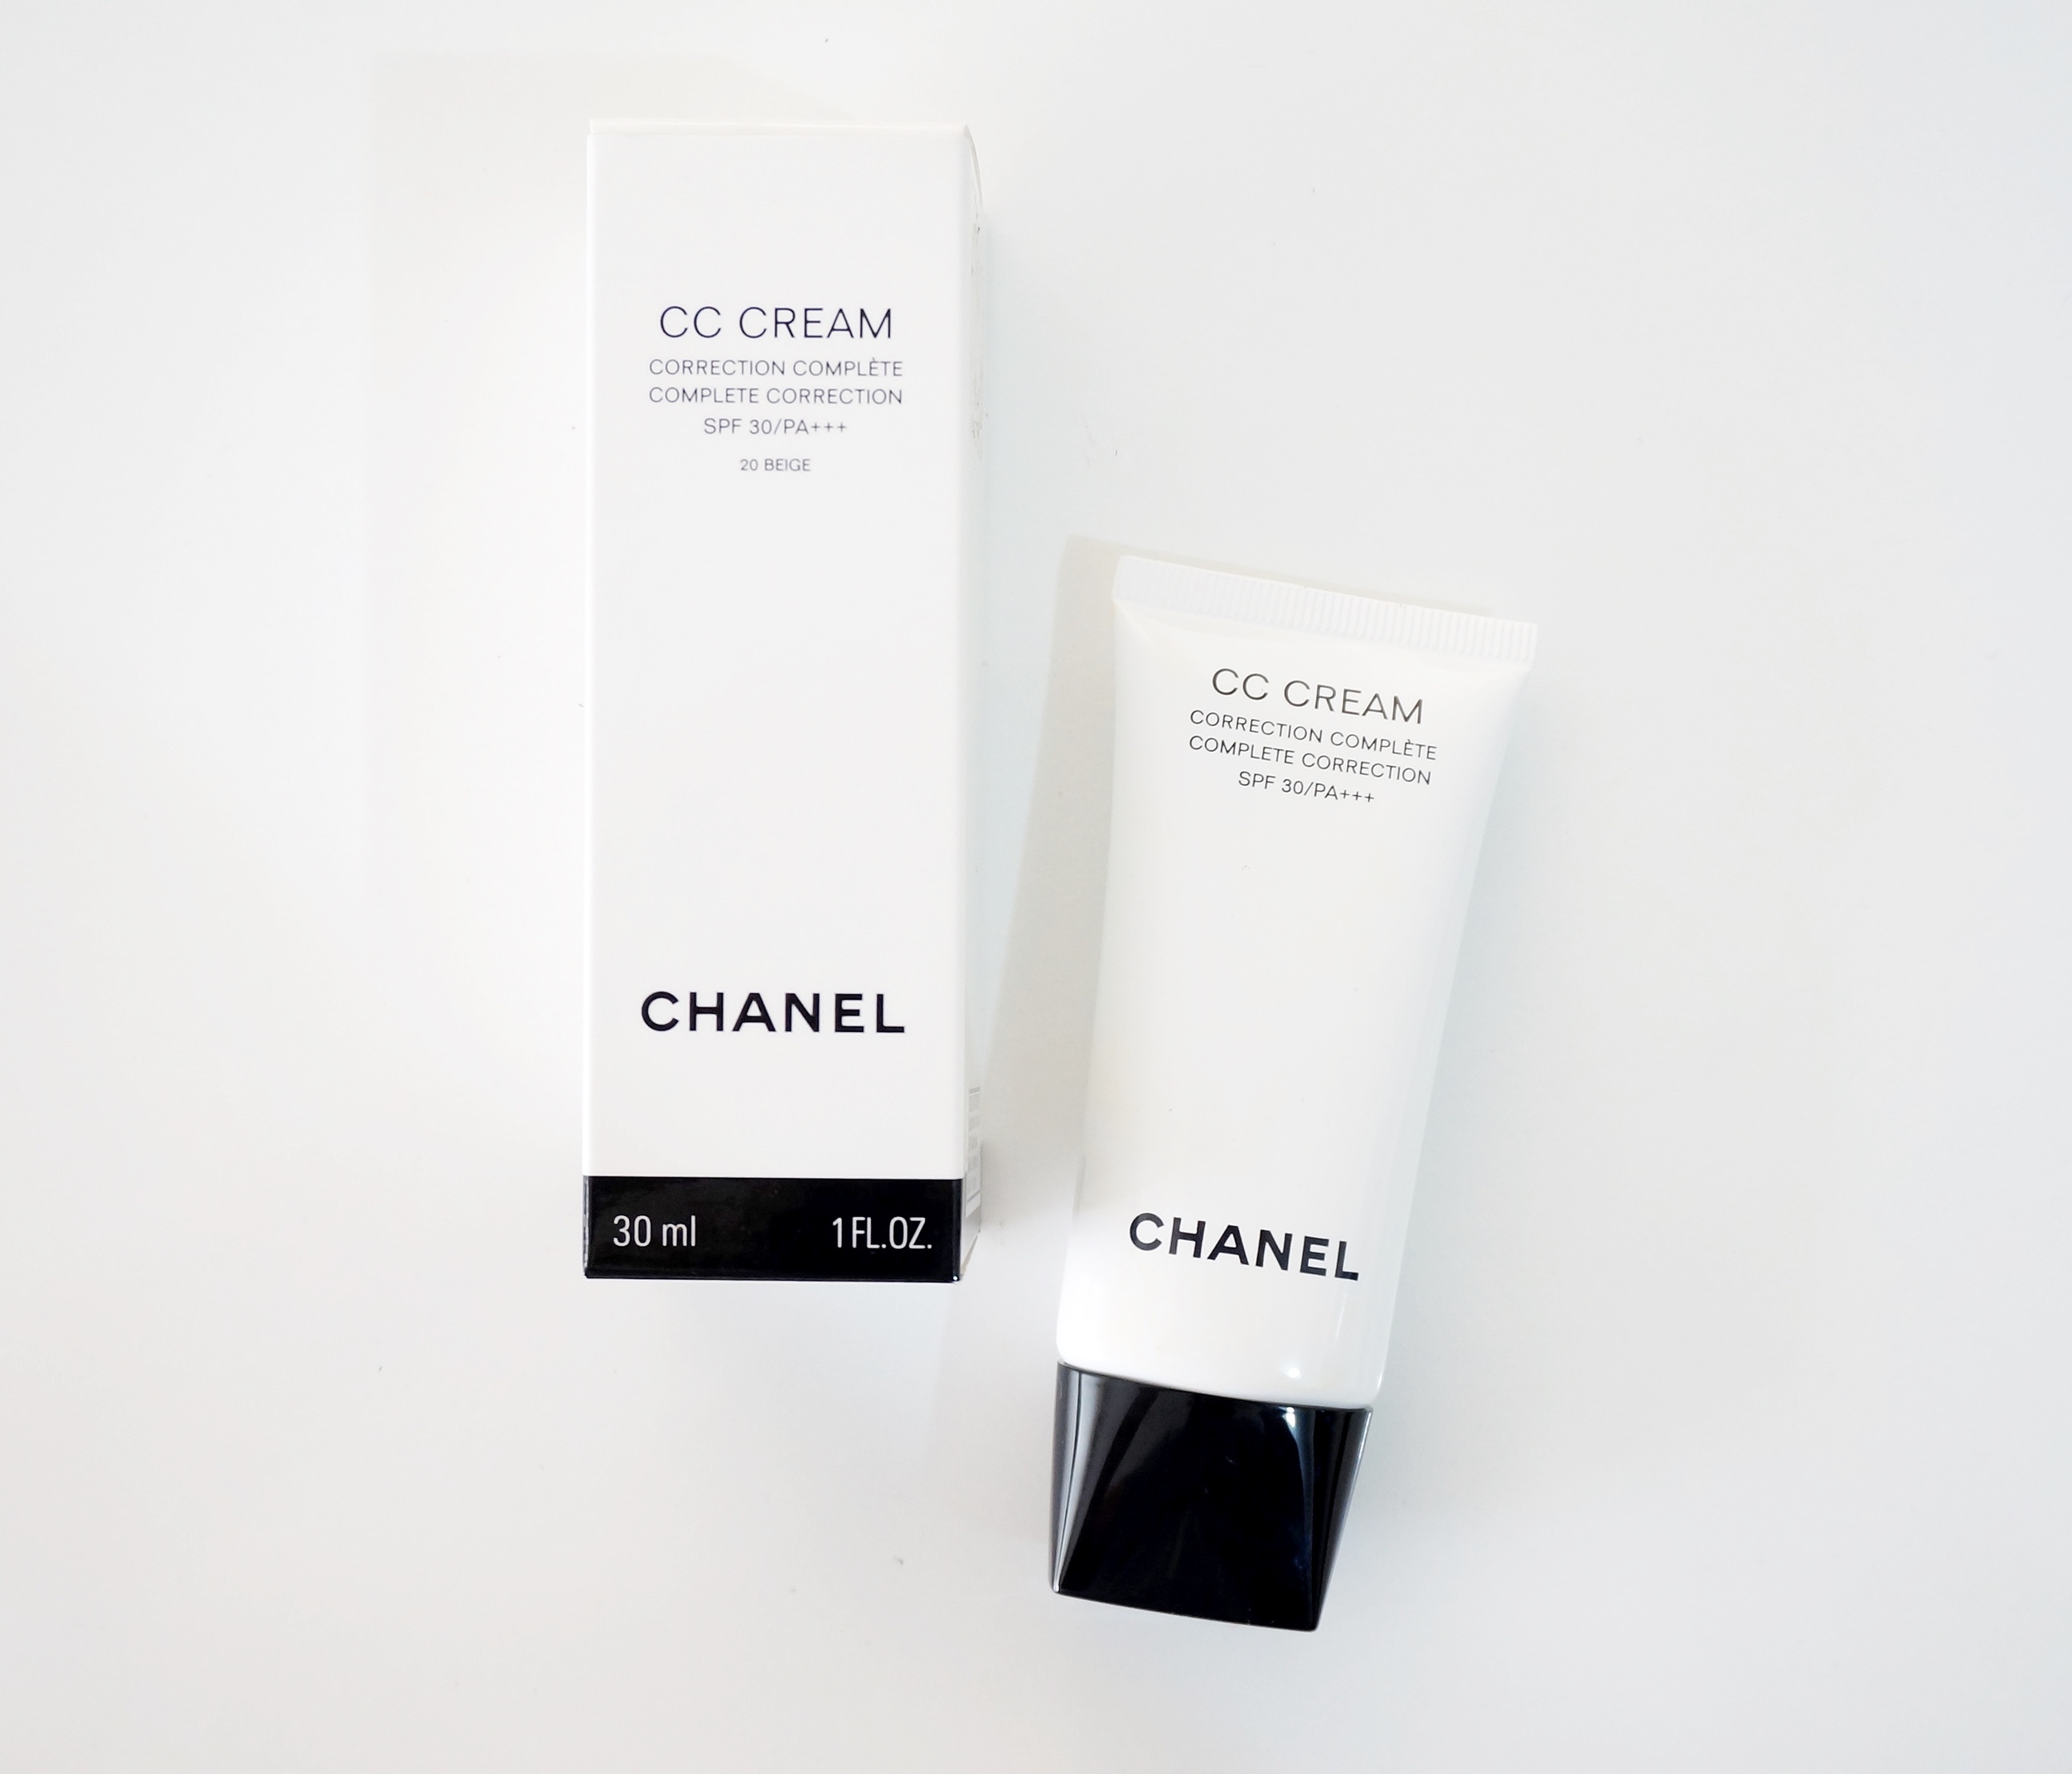 Aquaheart: Chanel CC Cream Complete Correction Sunscreen Broad